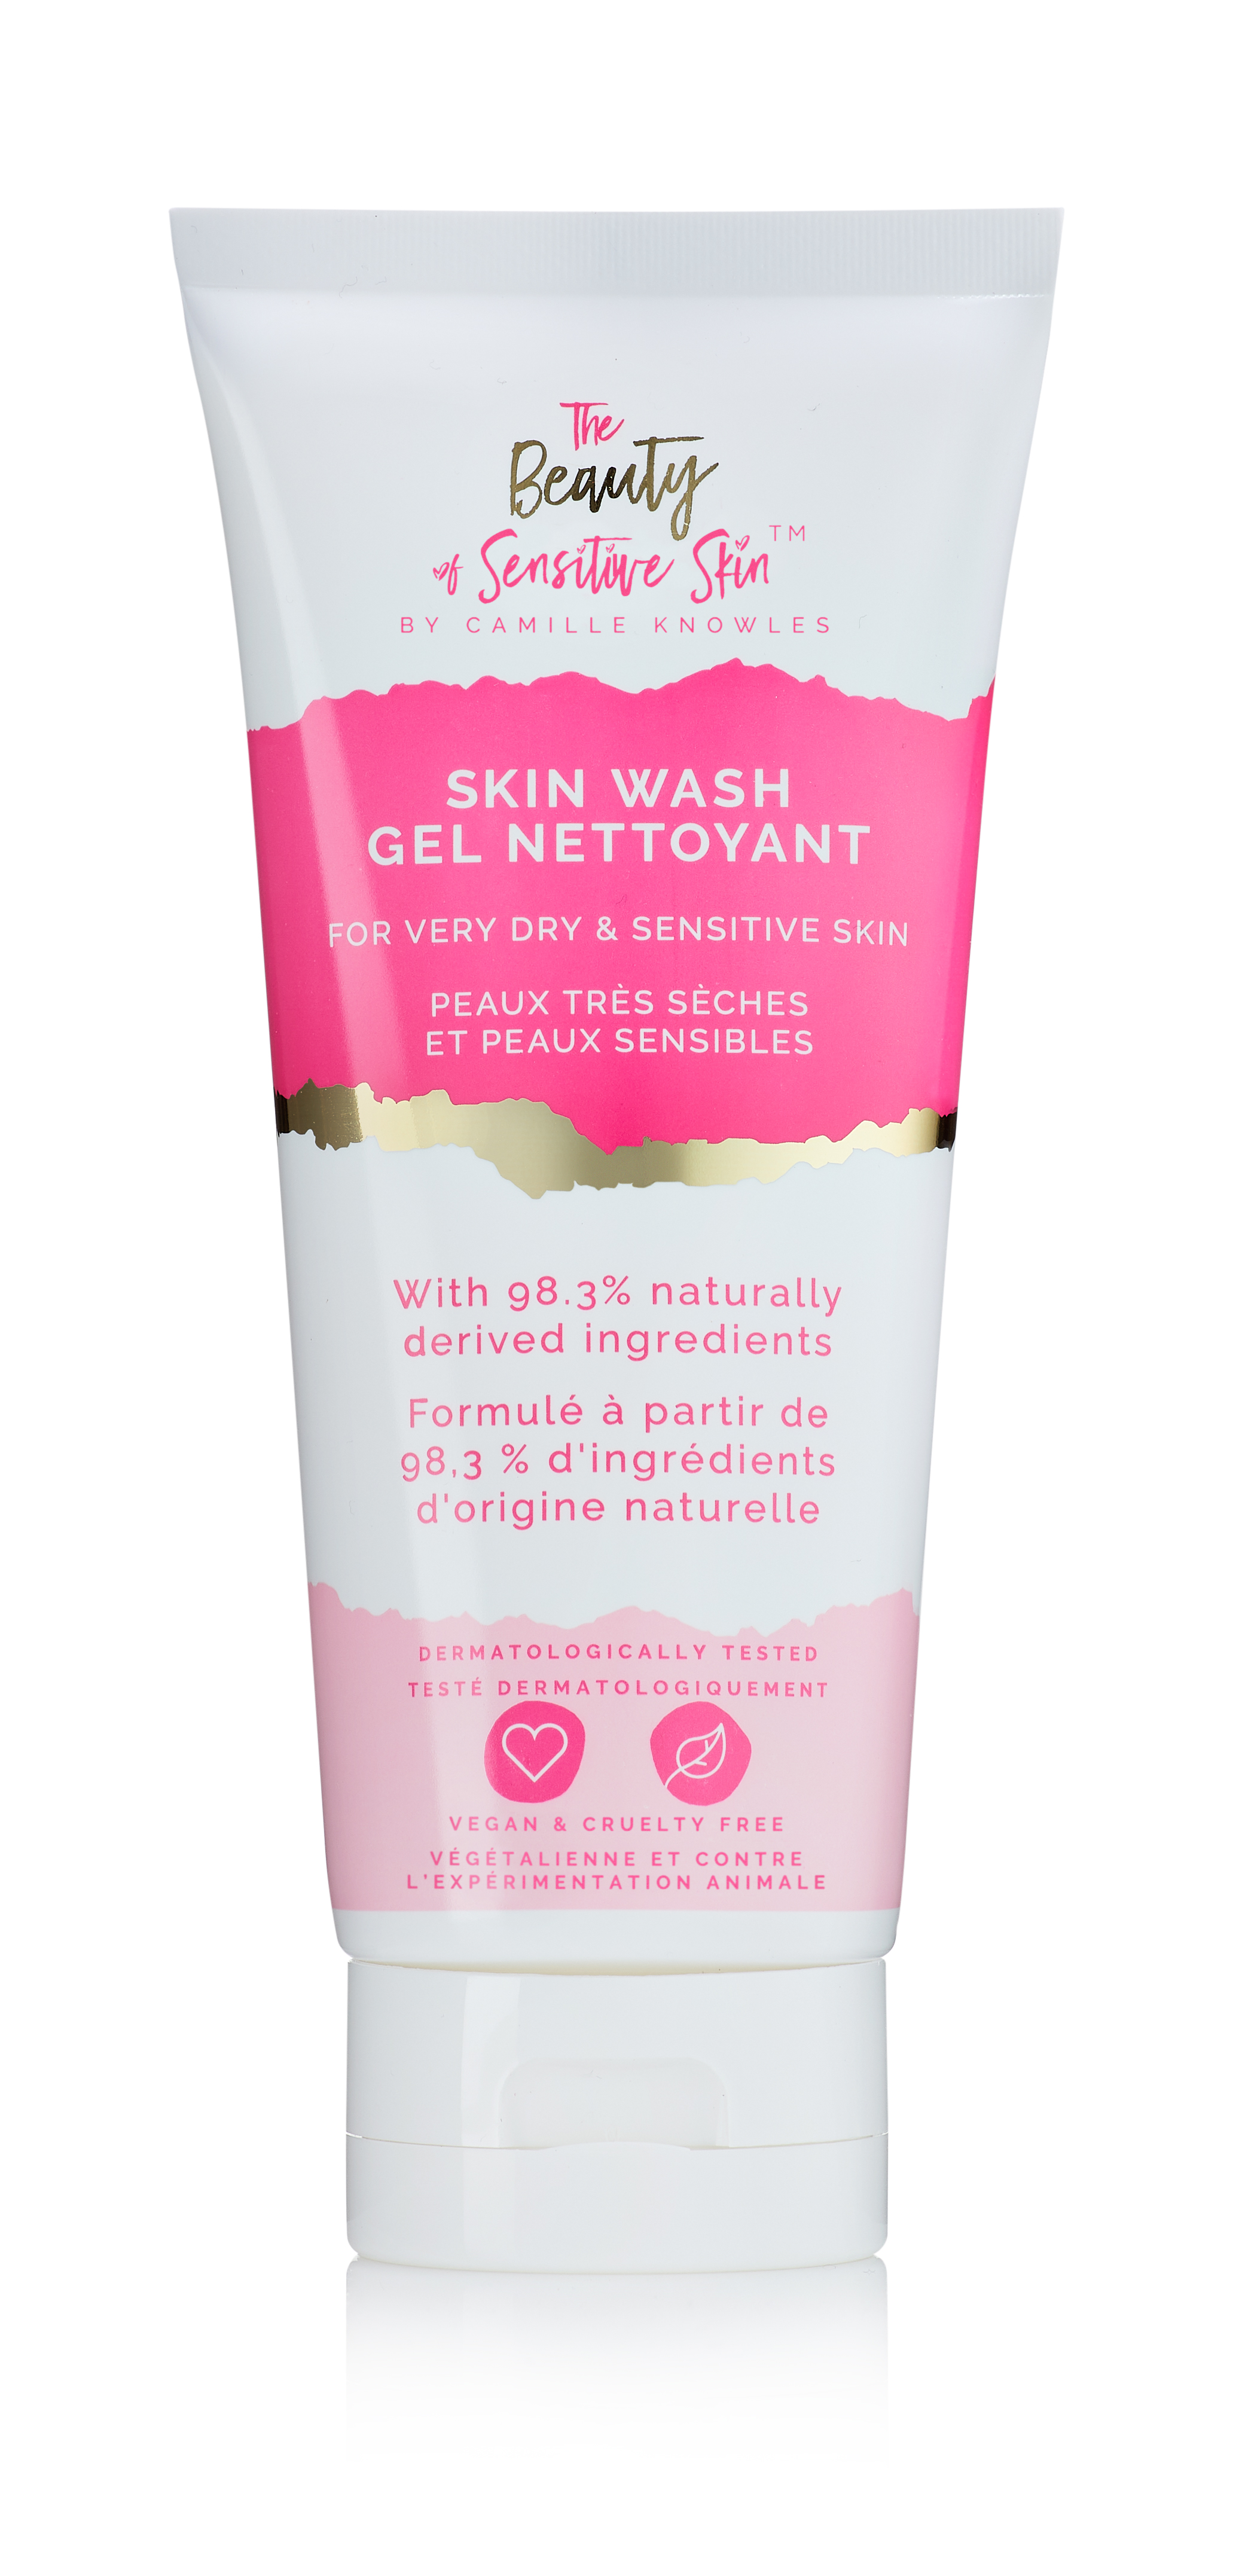 The Beauty of Sensitive Skin Skin Wash 200 ml